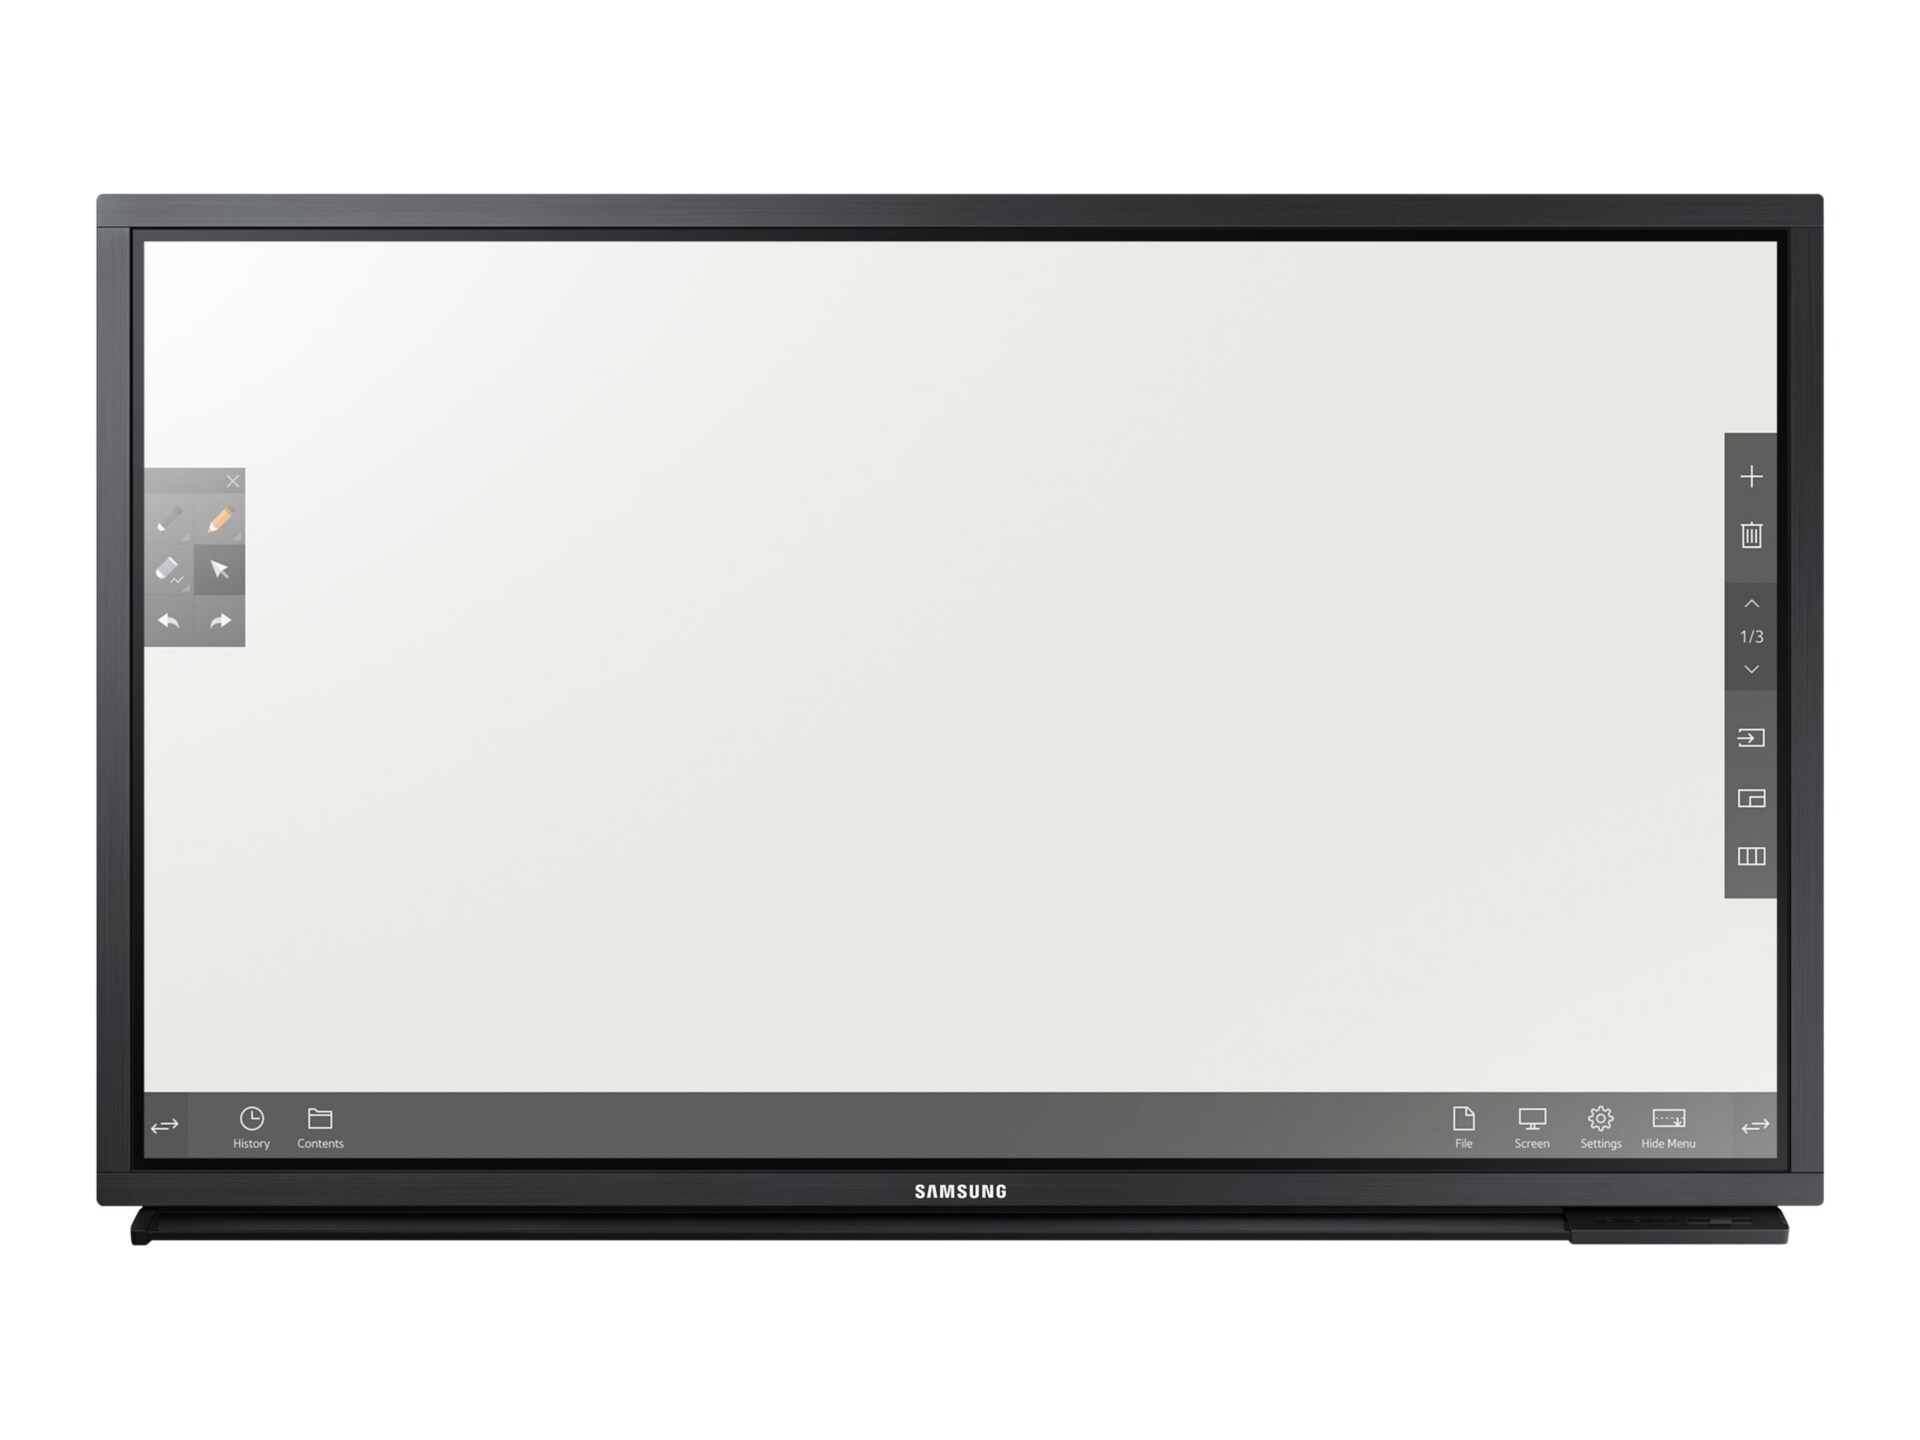 Samsung DM75E-BR DME-BR Series - 75" Class (74.5" viewable) LED display